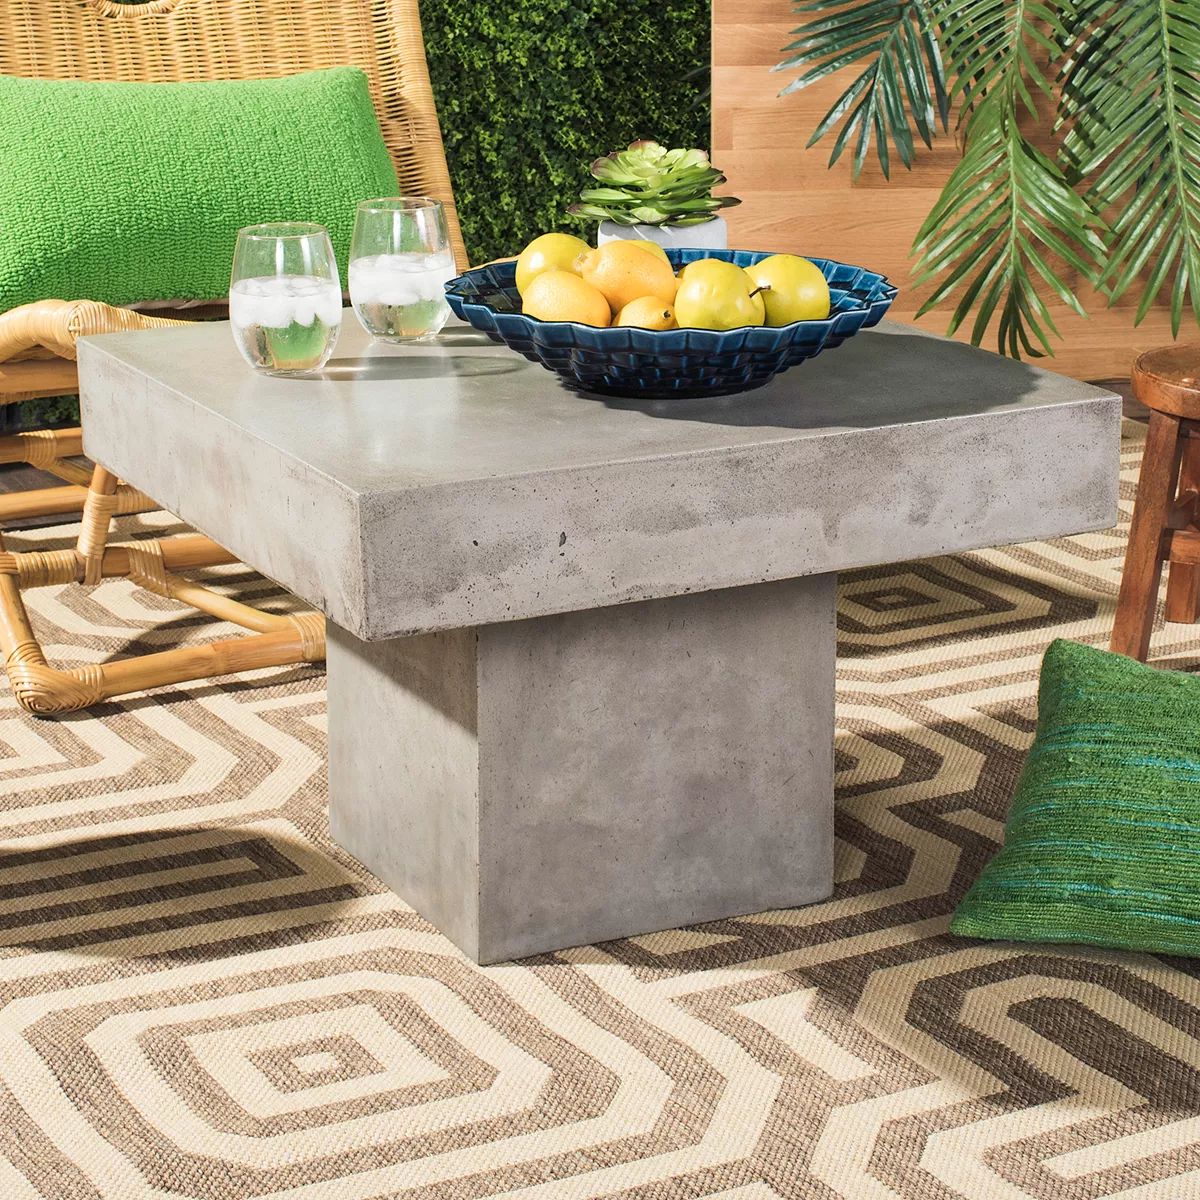 Safavieh Square Indoor / Outdoor Concrete Coffee Table | Kohl's